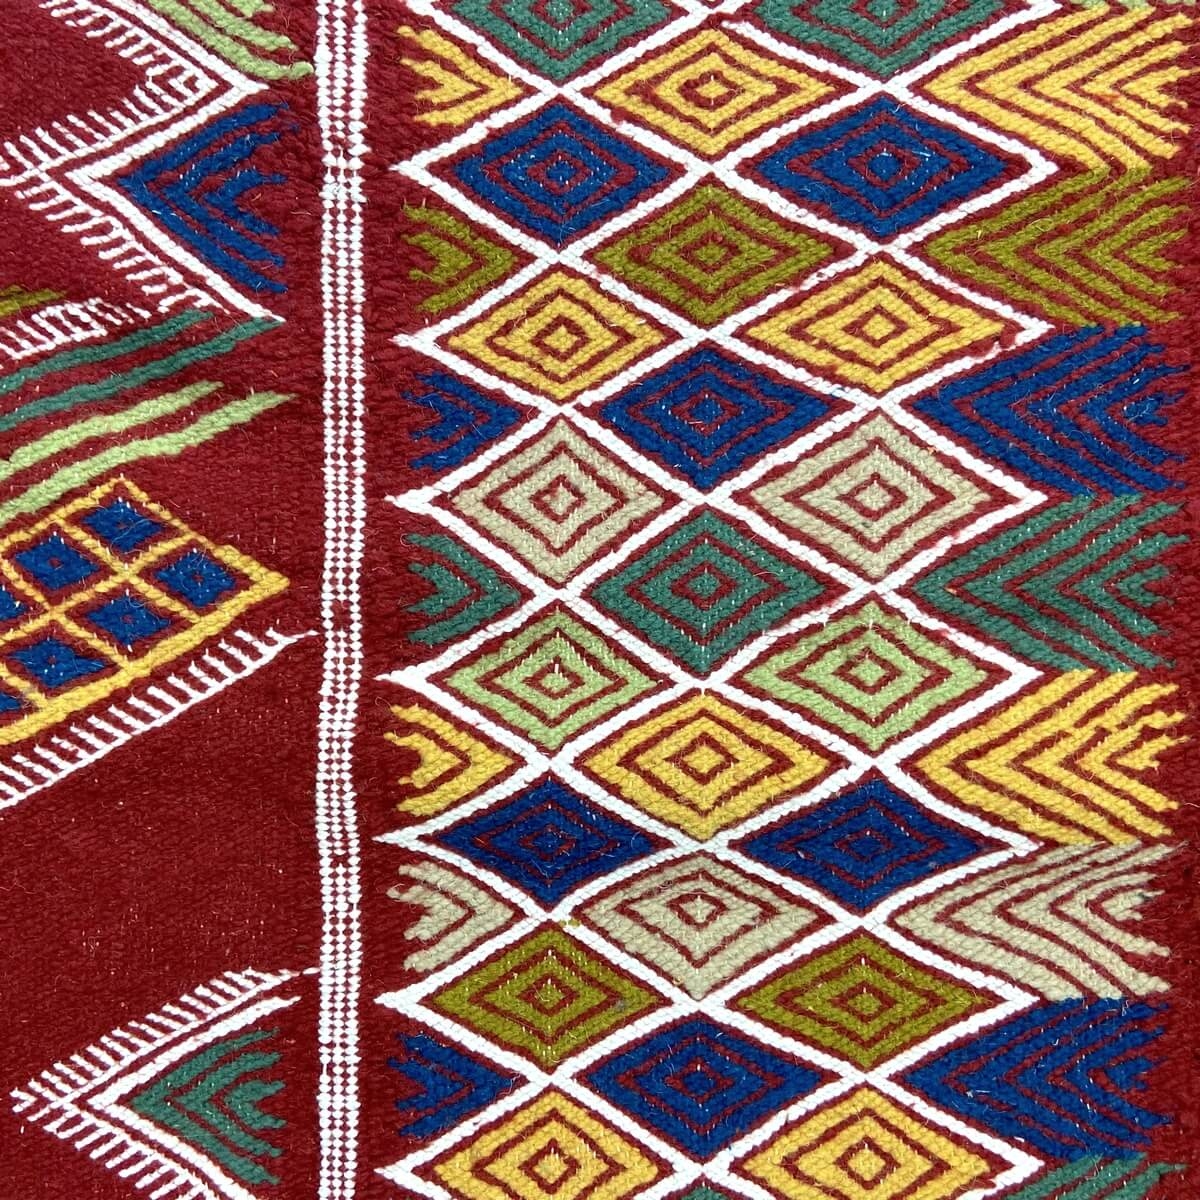 Berber tapijt Tapijt Kilim Ingad 135x240 Rode Bordeaux (Handgeweven, Wol, Tunesië) Tunesisch kilimdeken, Marokkaanse stijl. Rech